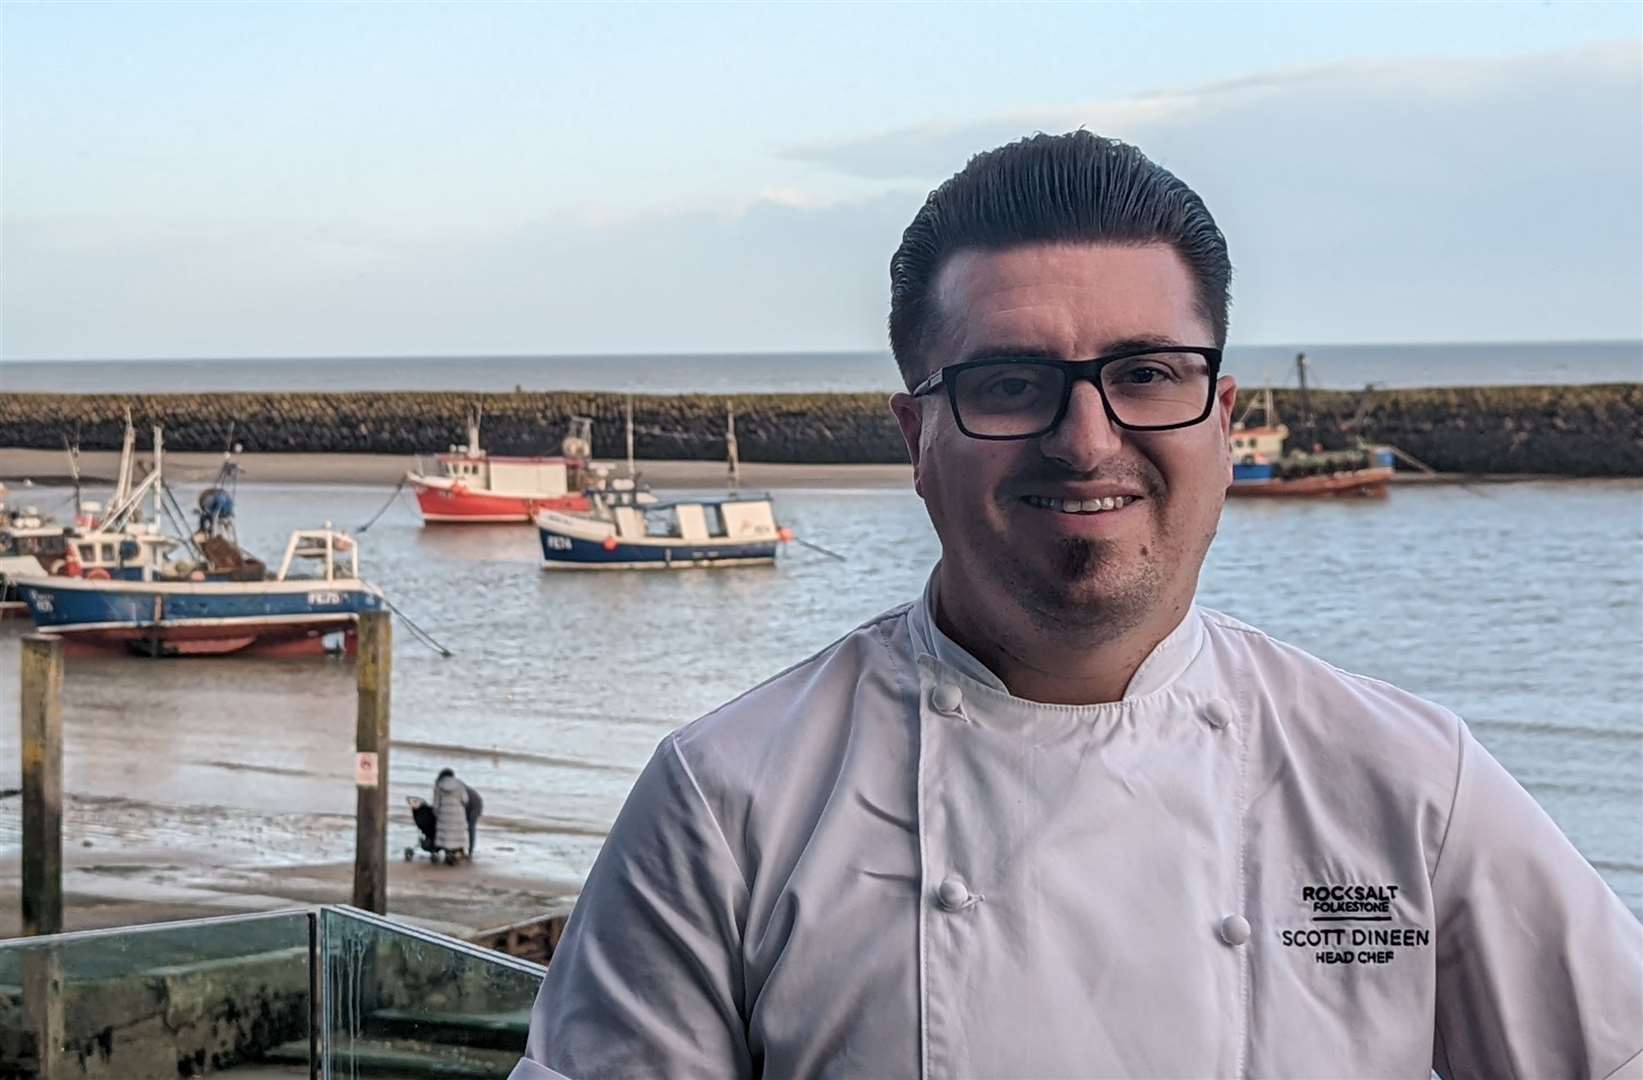 Scott Dineen is the new head chef of Rocksalt